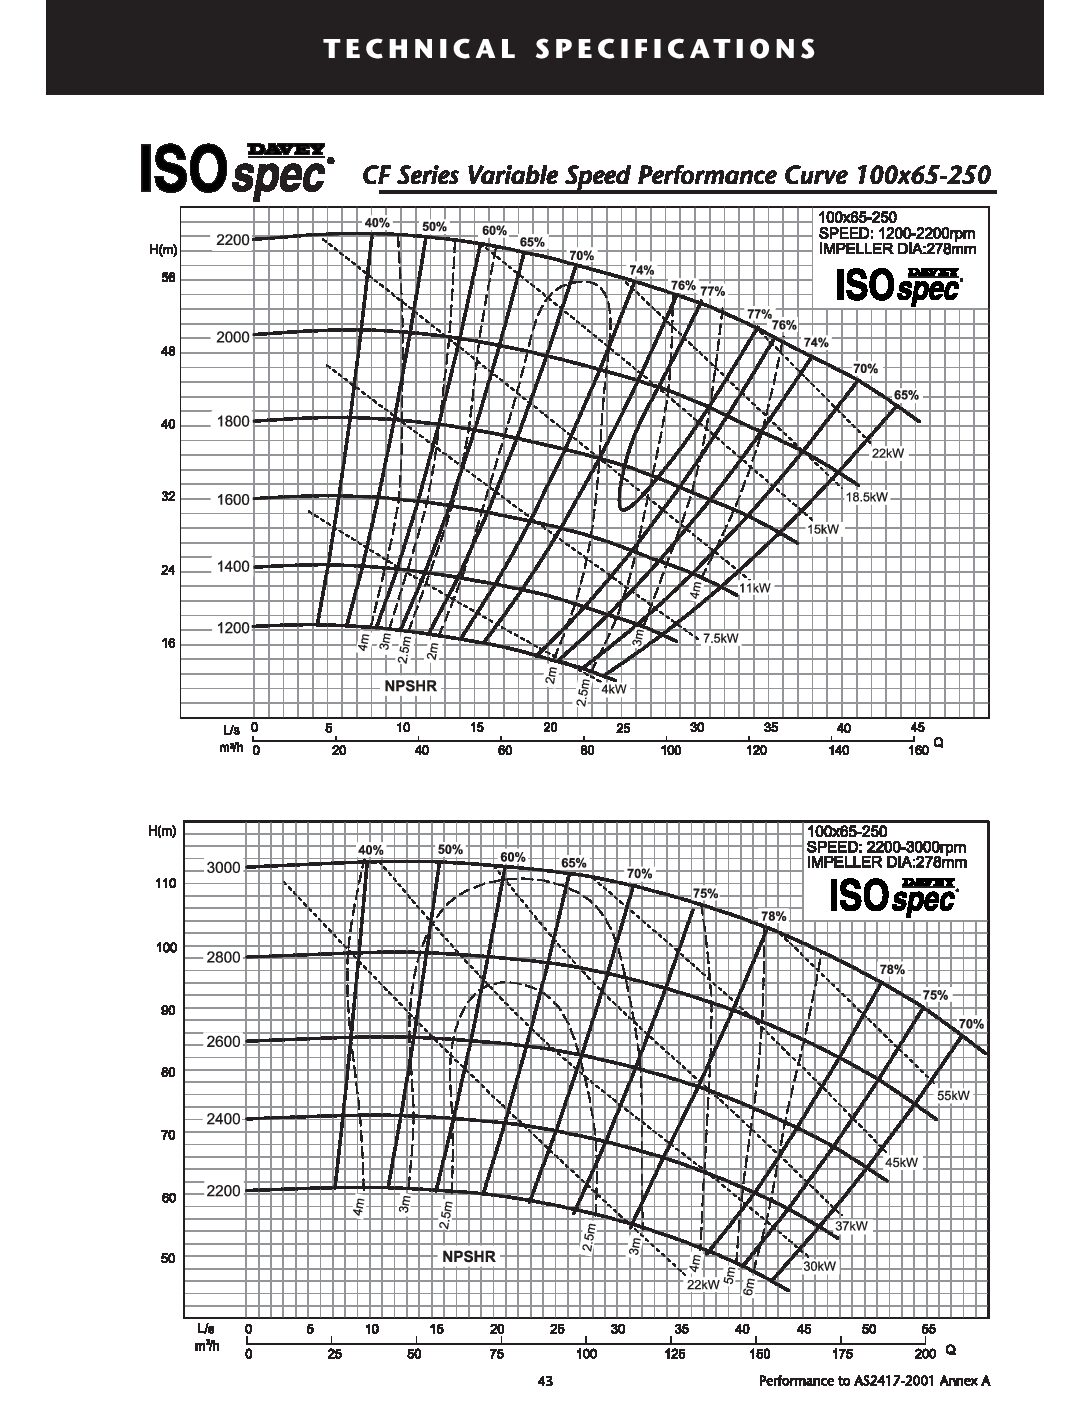 CF65-250 curve